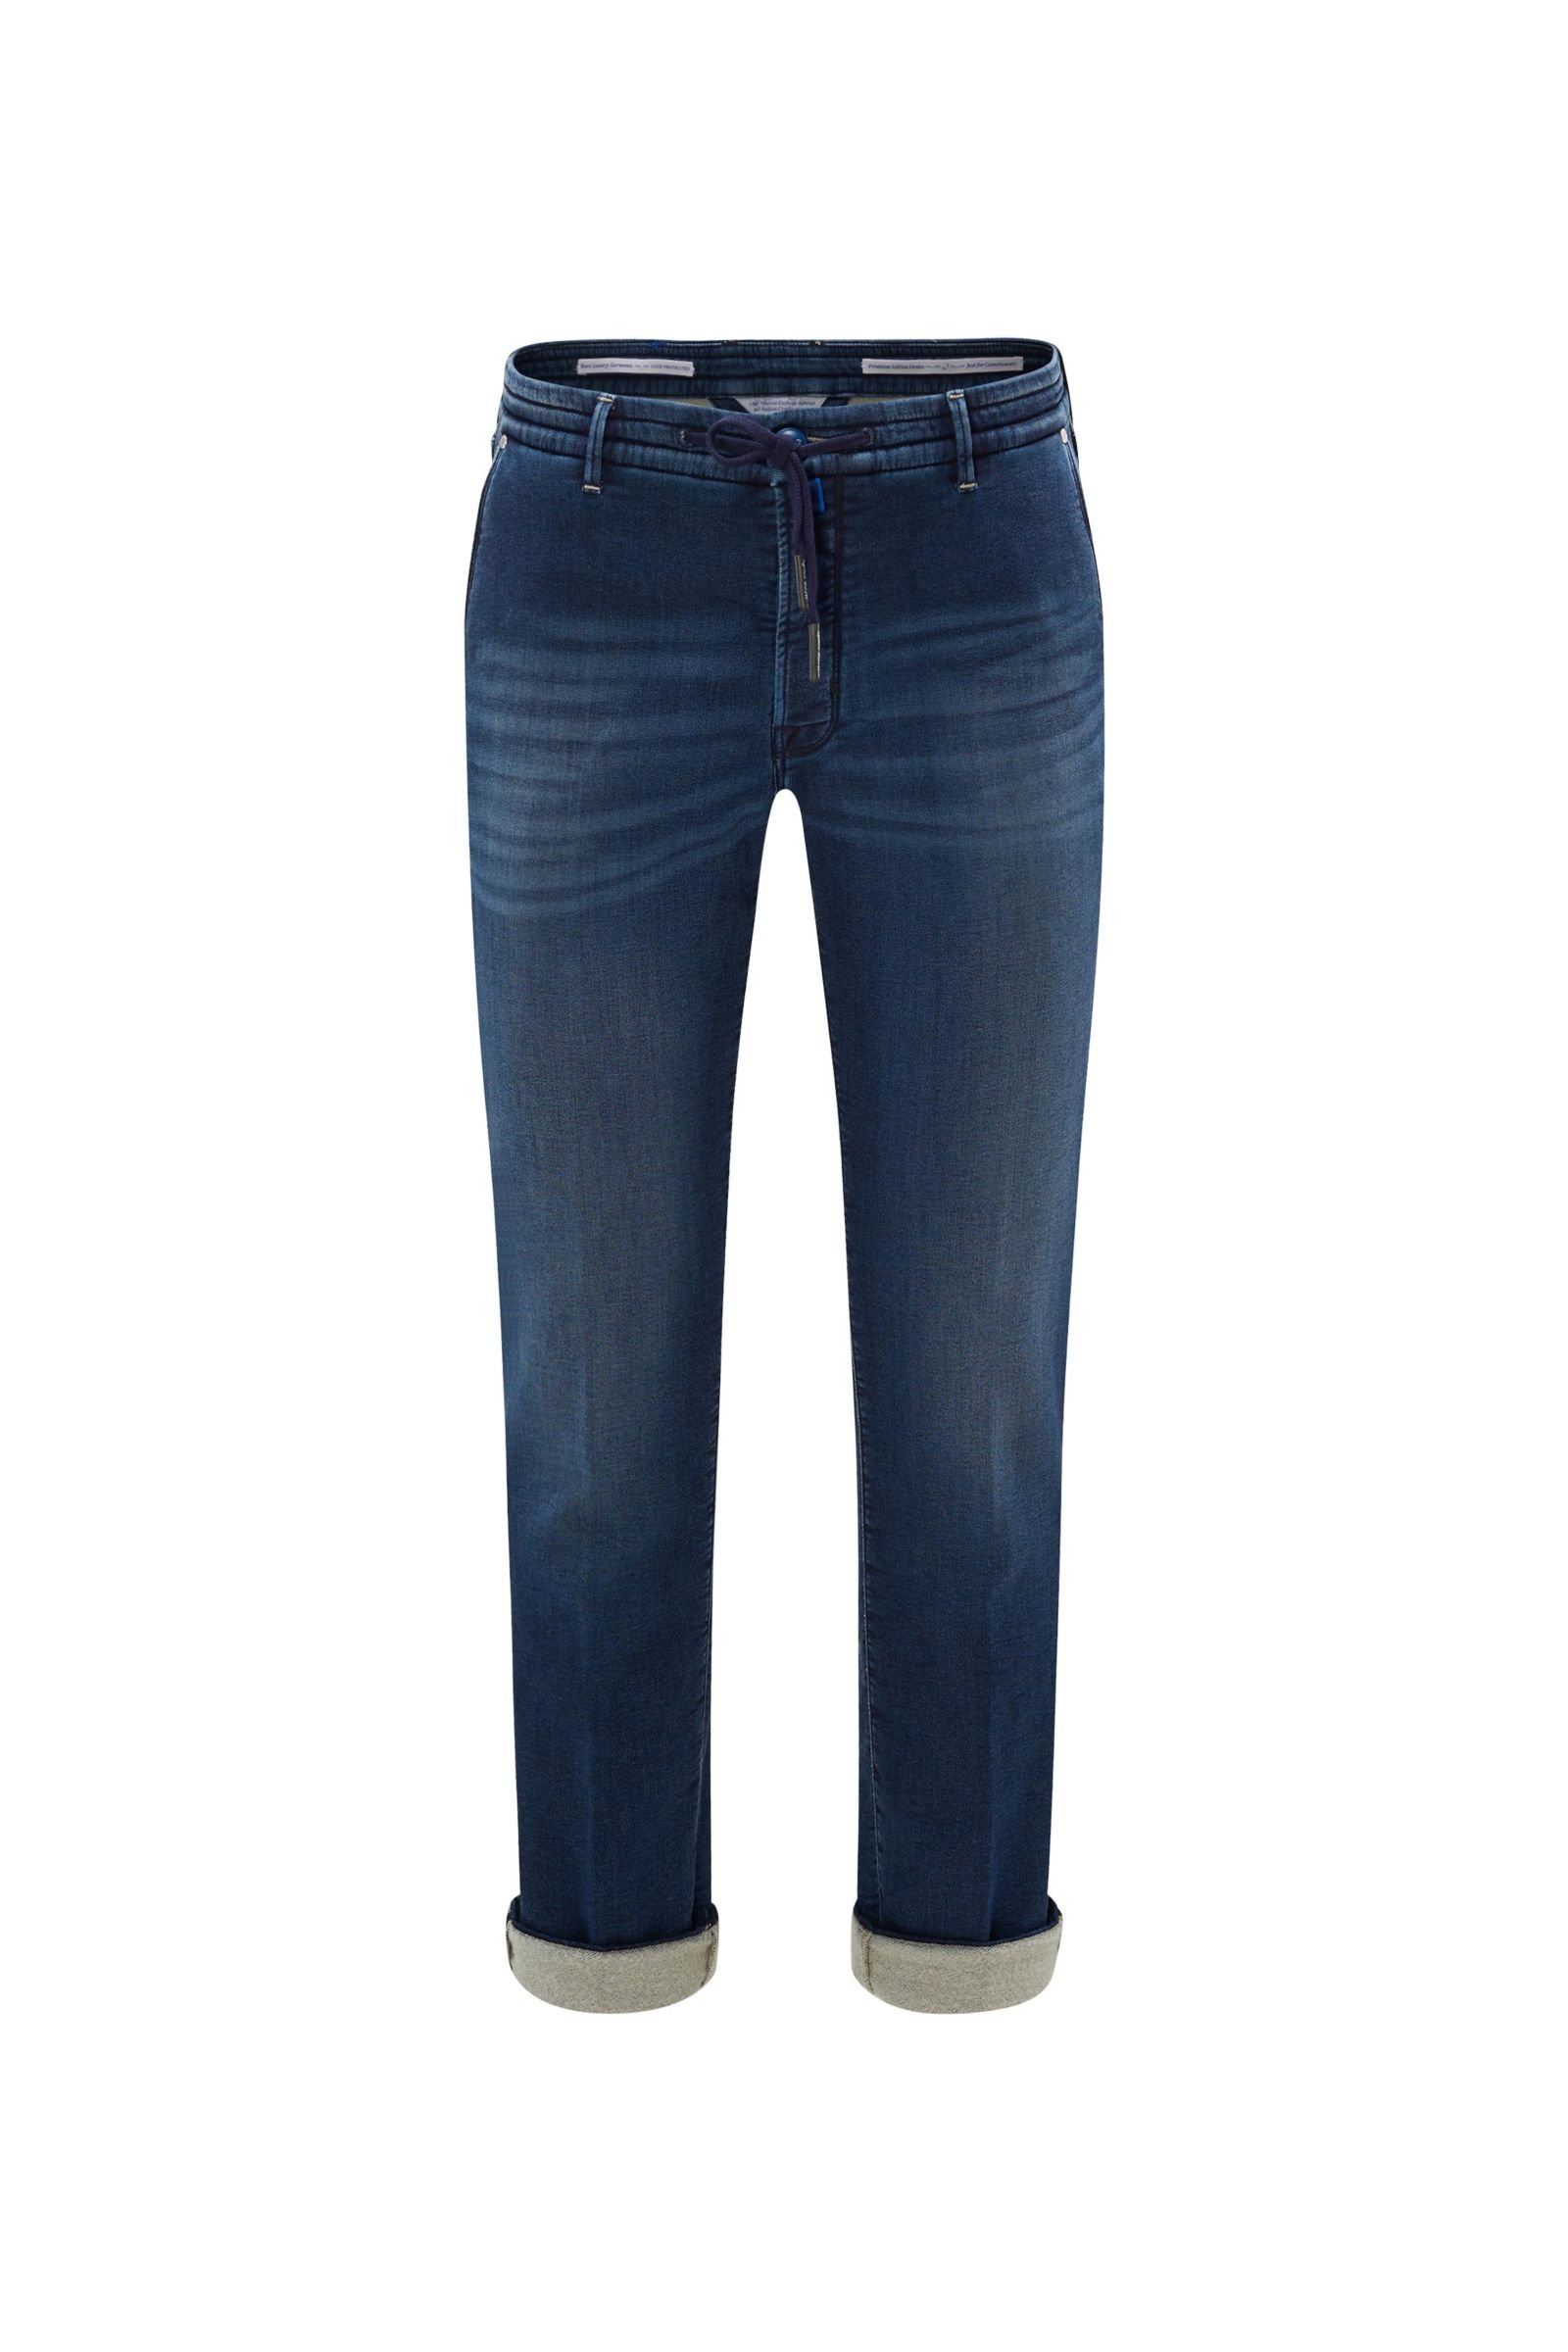 Jeans jogger pants 'J676 Relax Comfort Slim Fit' dark blue